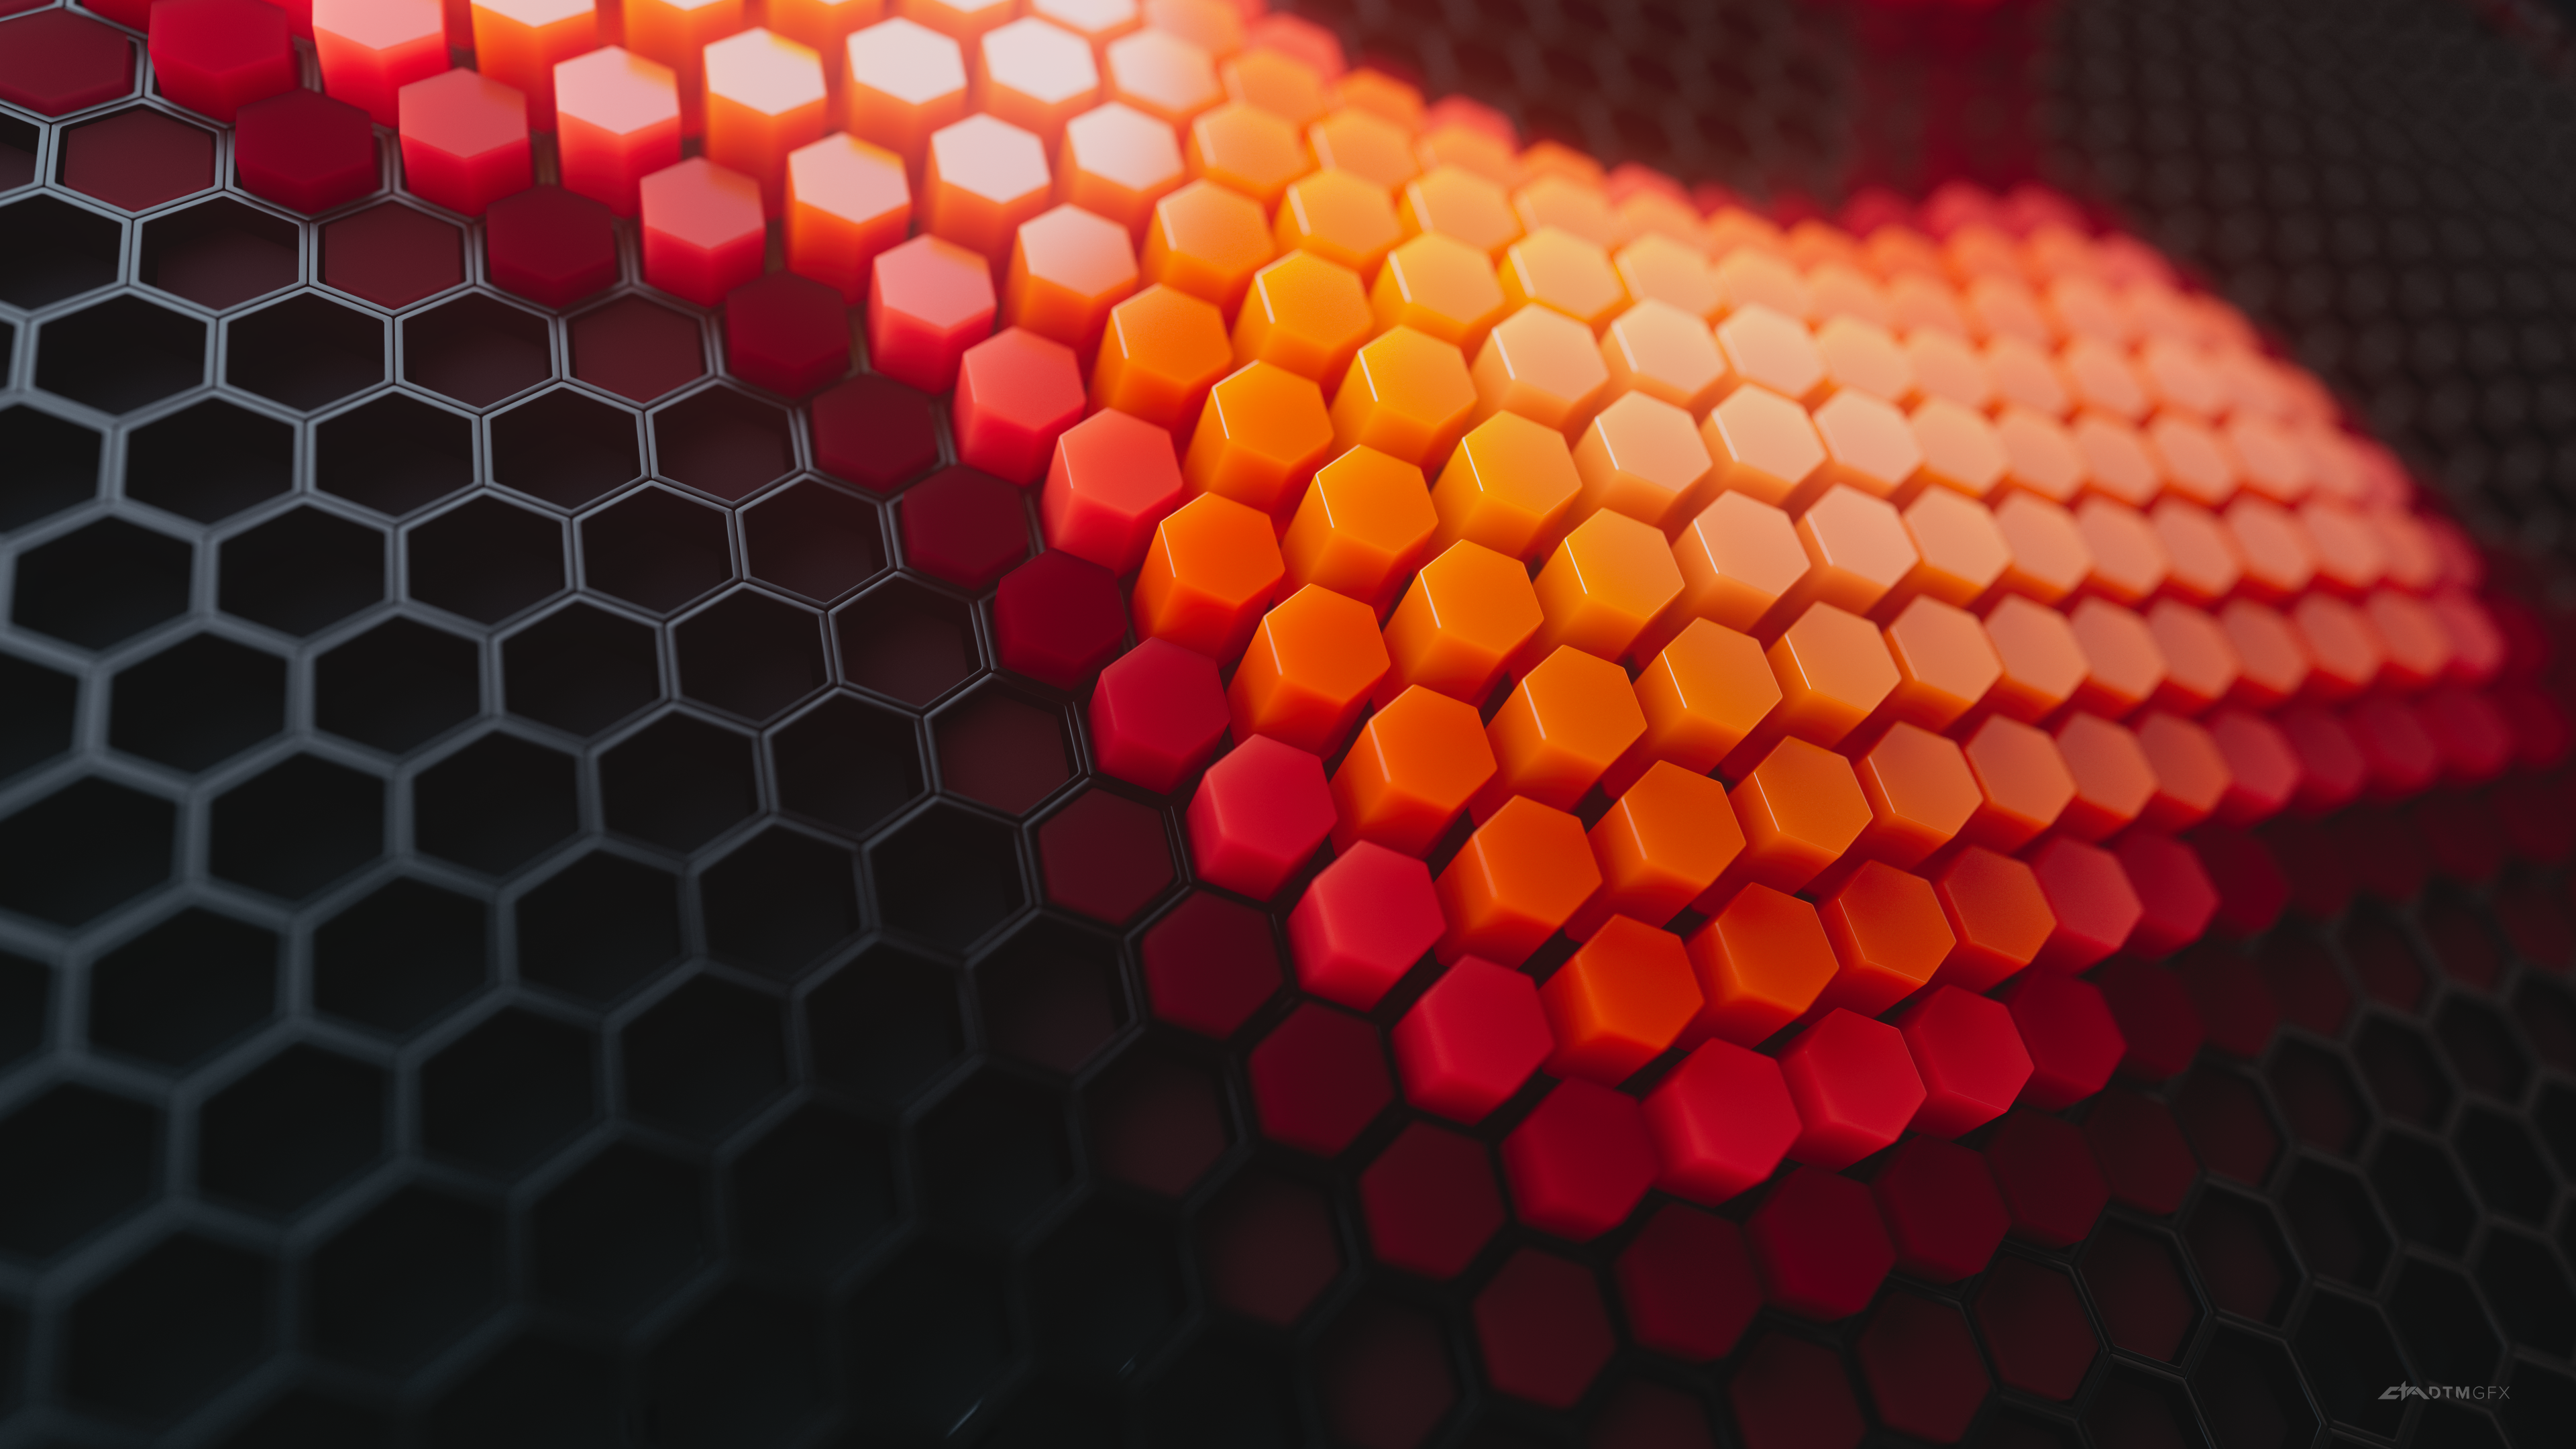 Hexagons 4K Wallpaper, Patterns, Orange background, Orange blocks, Black blocks, Geometric, Abstract